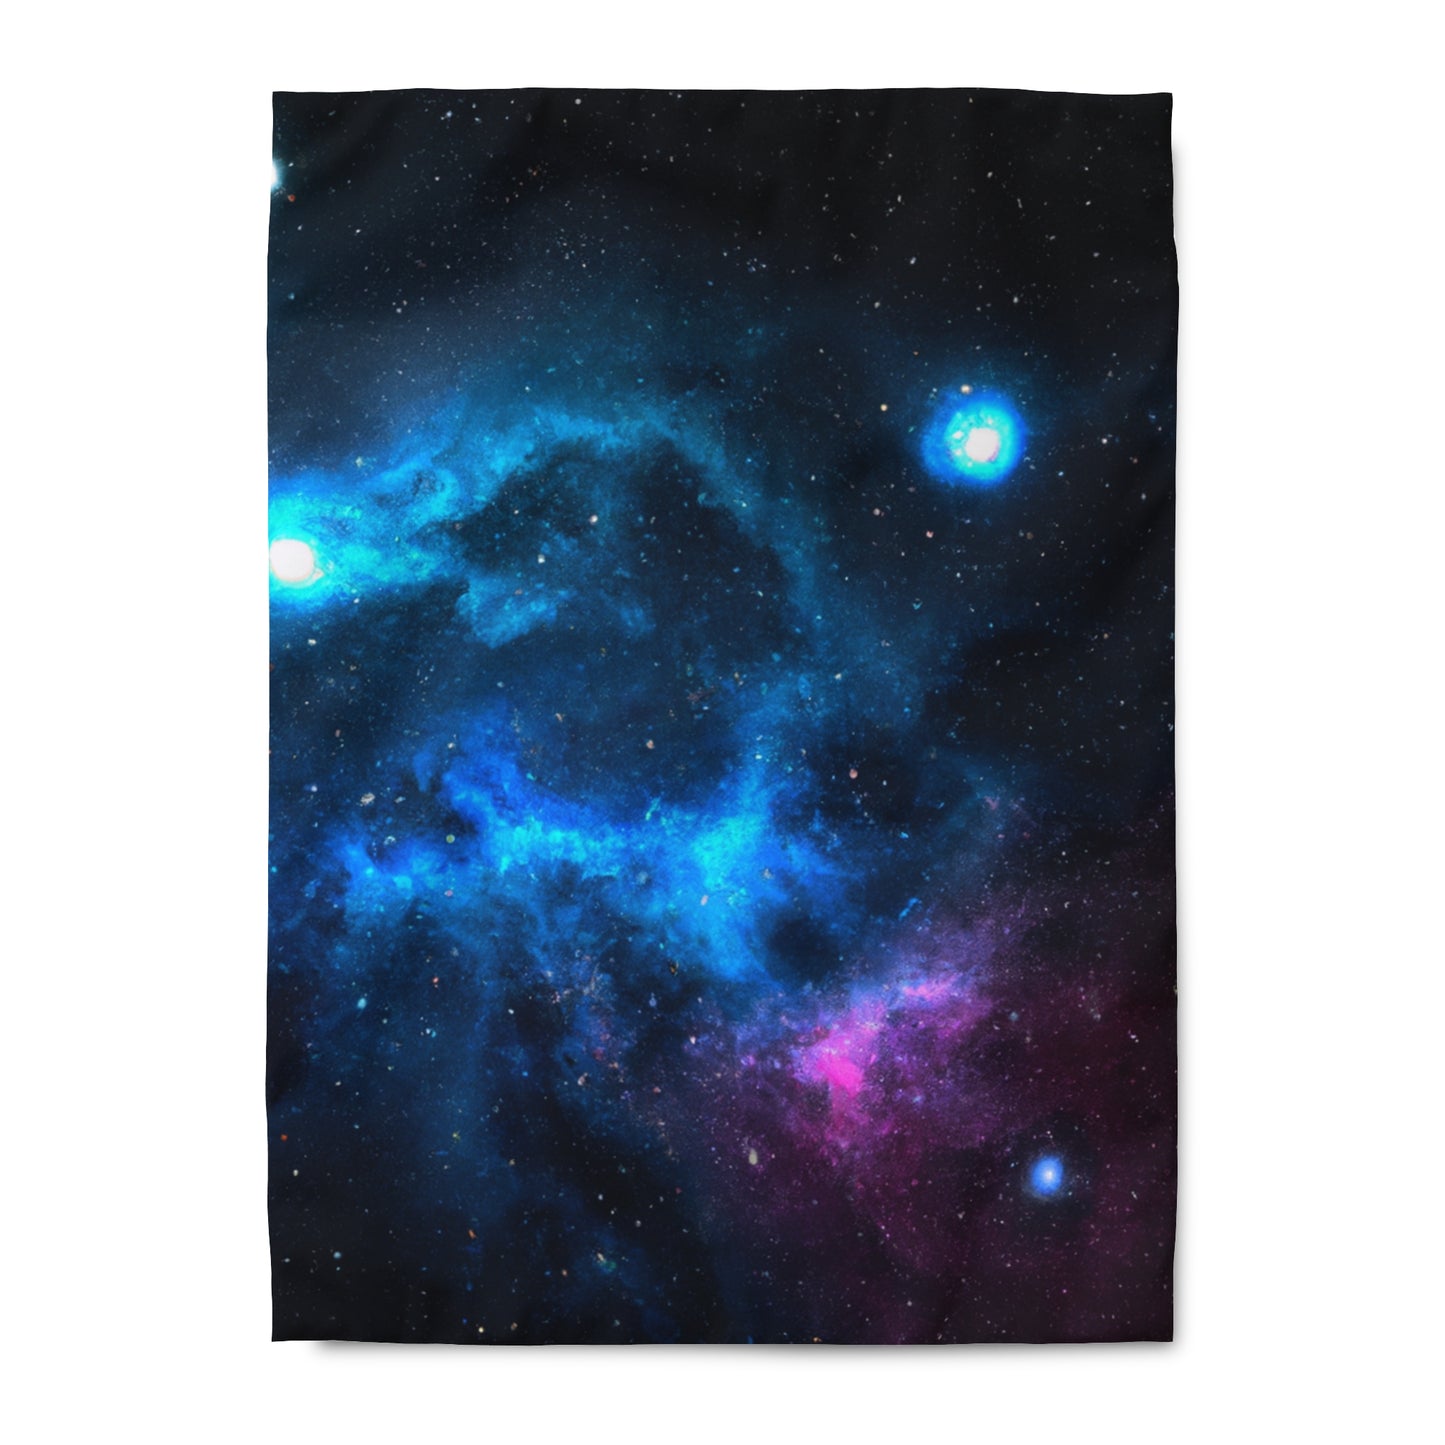 Dreamy Sandy Swirls - Astronomy Duvet Bed Cover